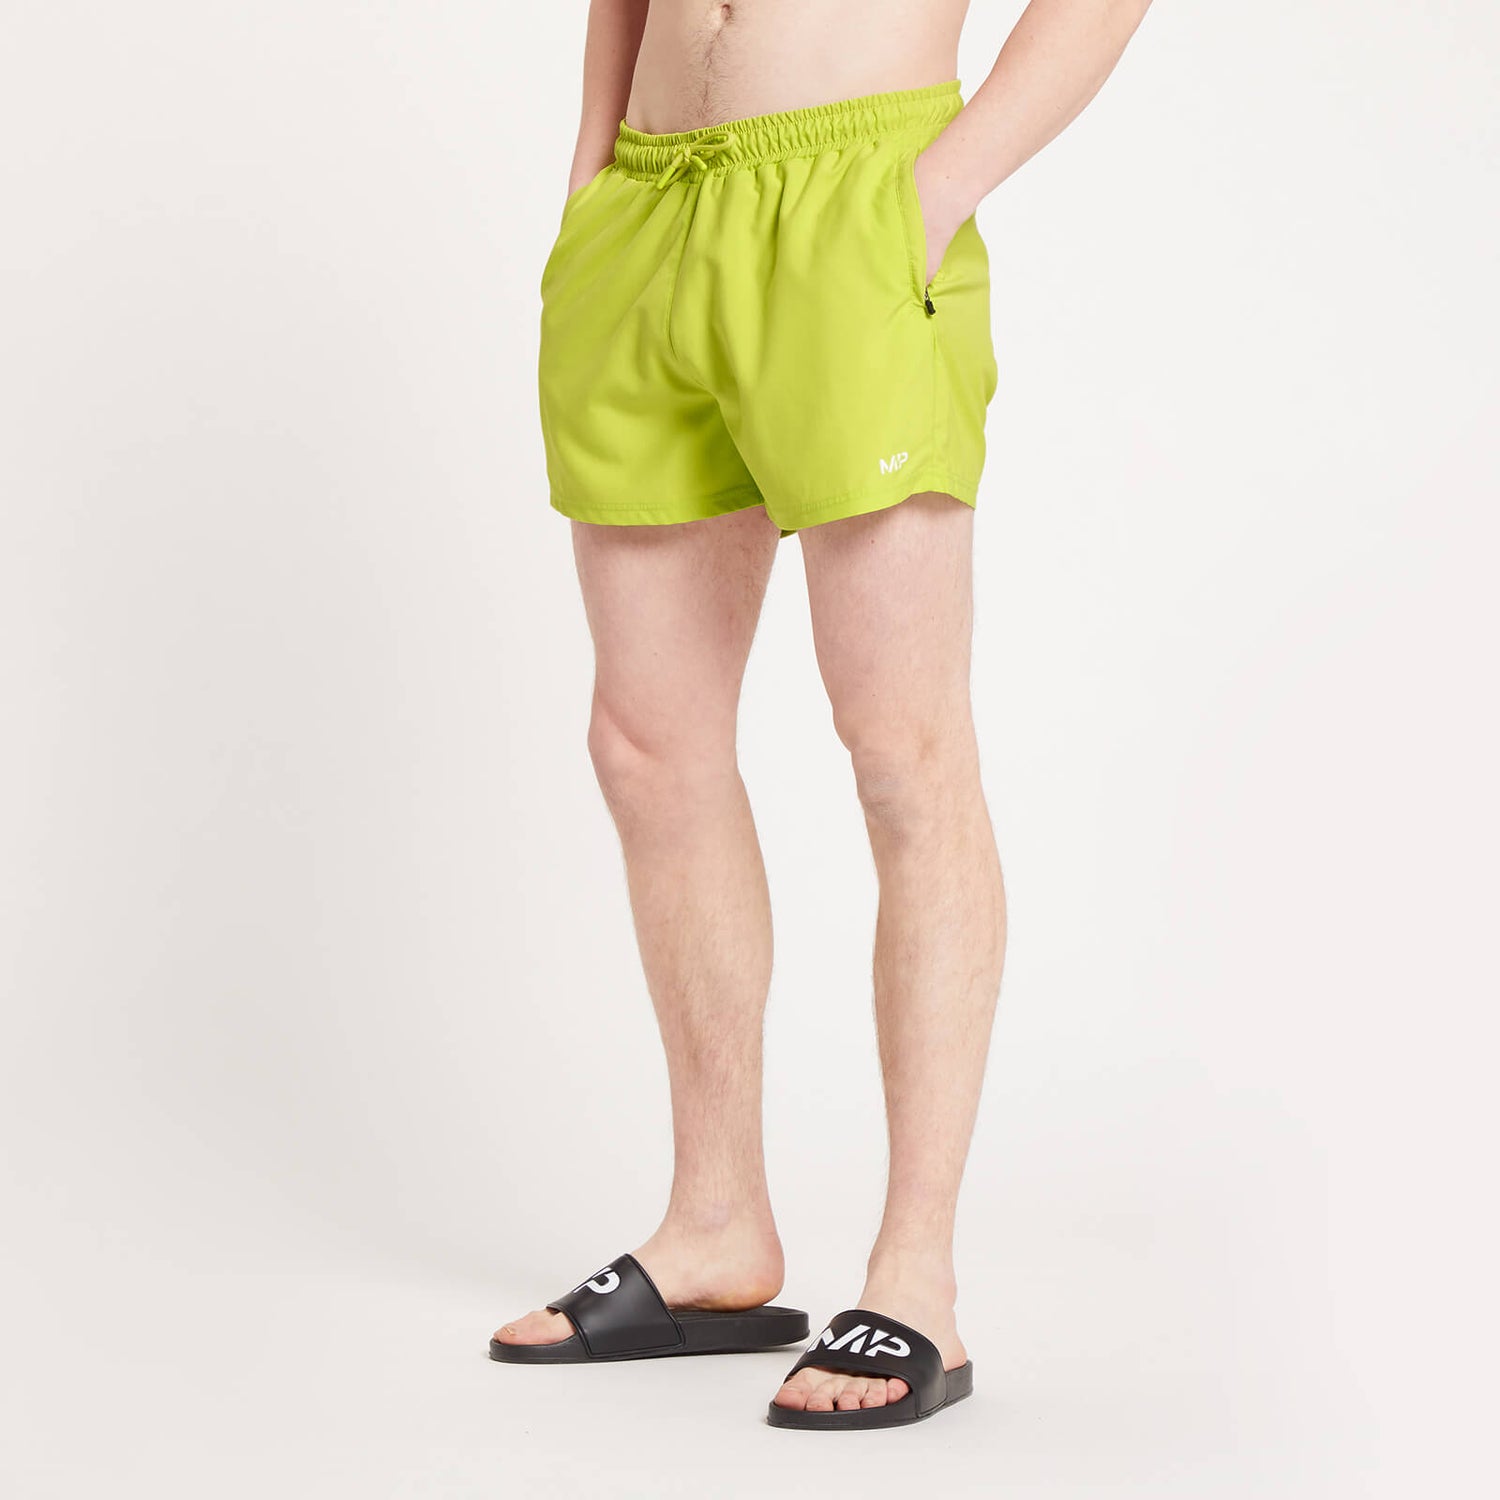 MP Atlantic大西洋系列男士游泳短裤 - 黄绿色 - XXS